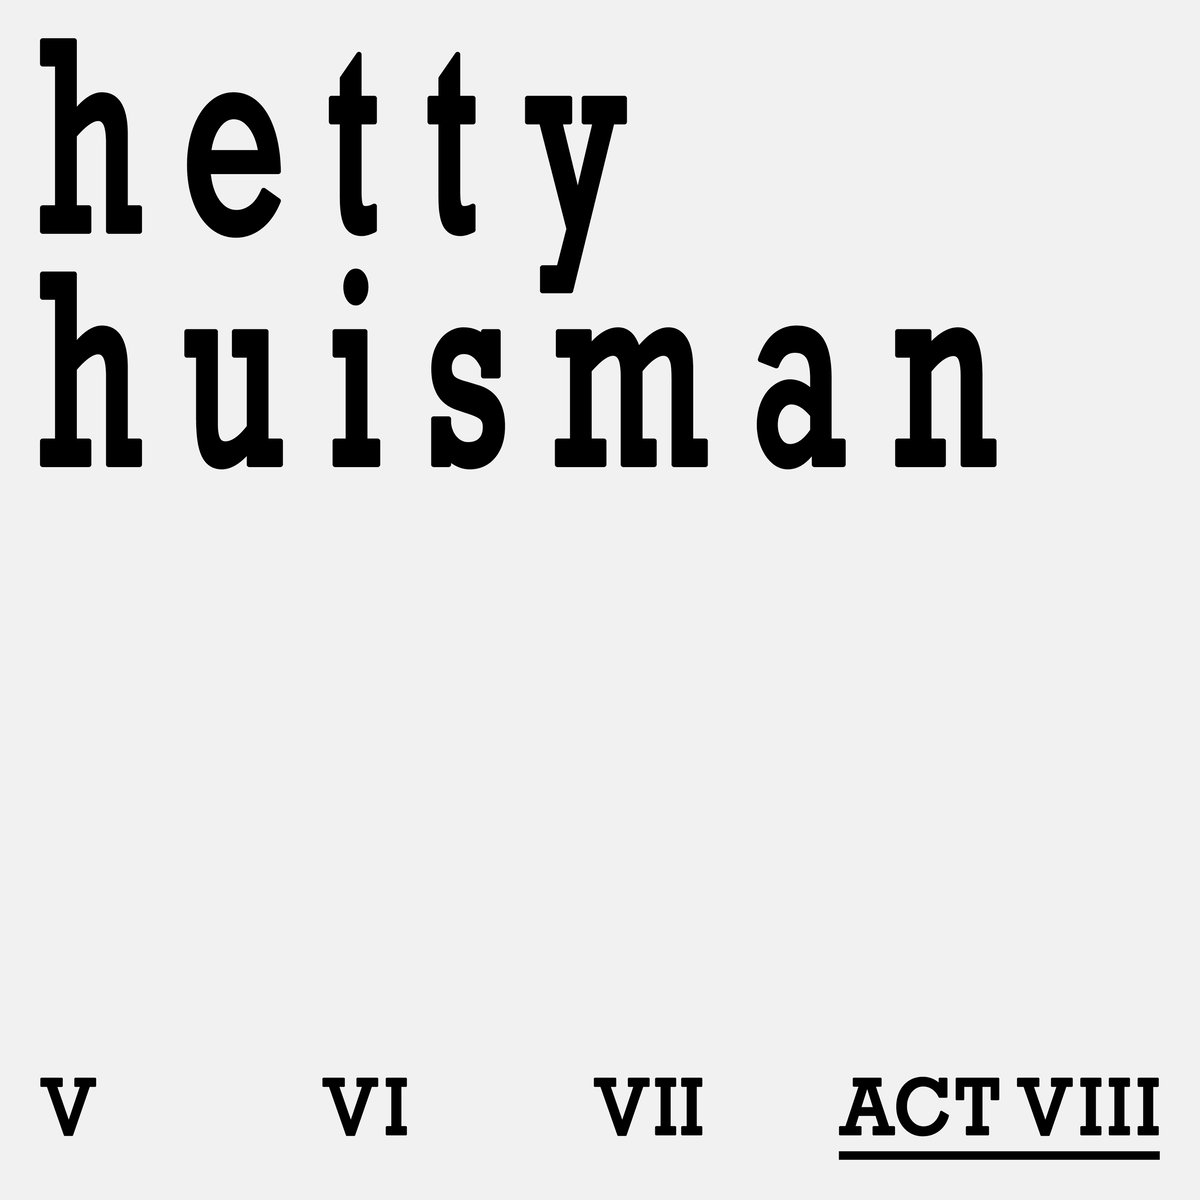 Image of VIII: Hetty Huisman